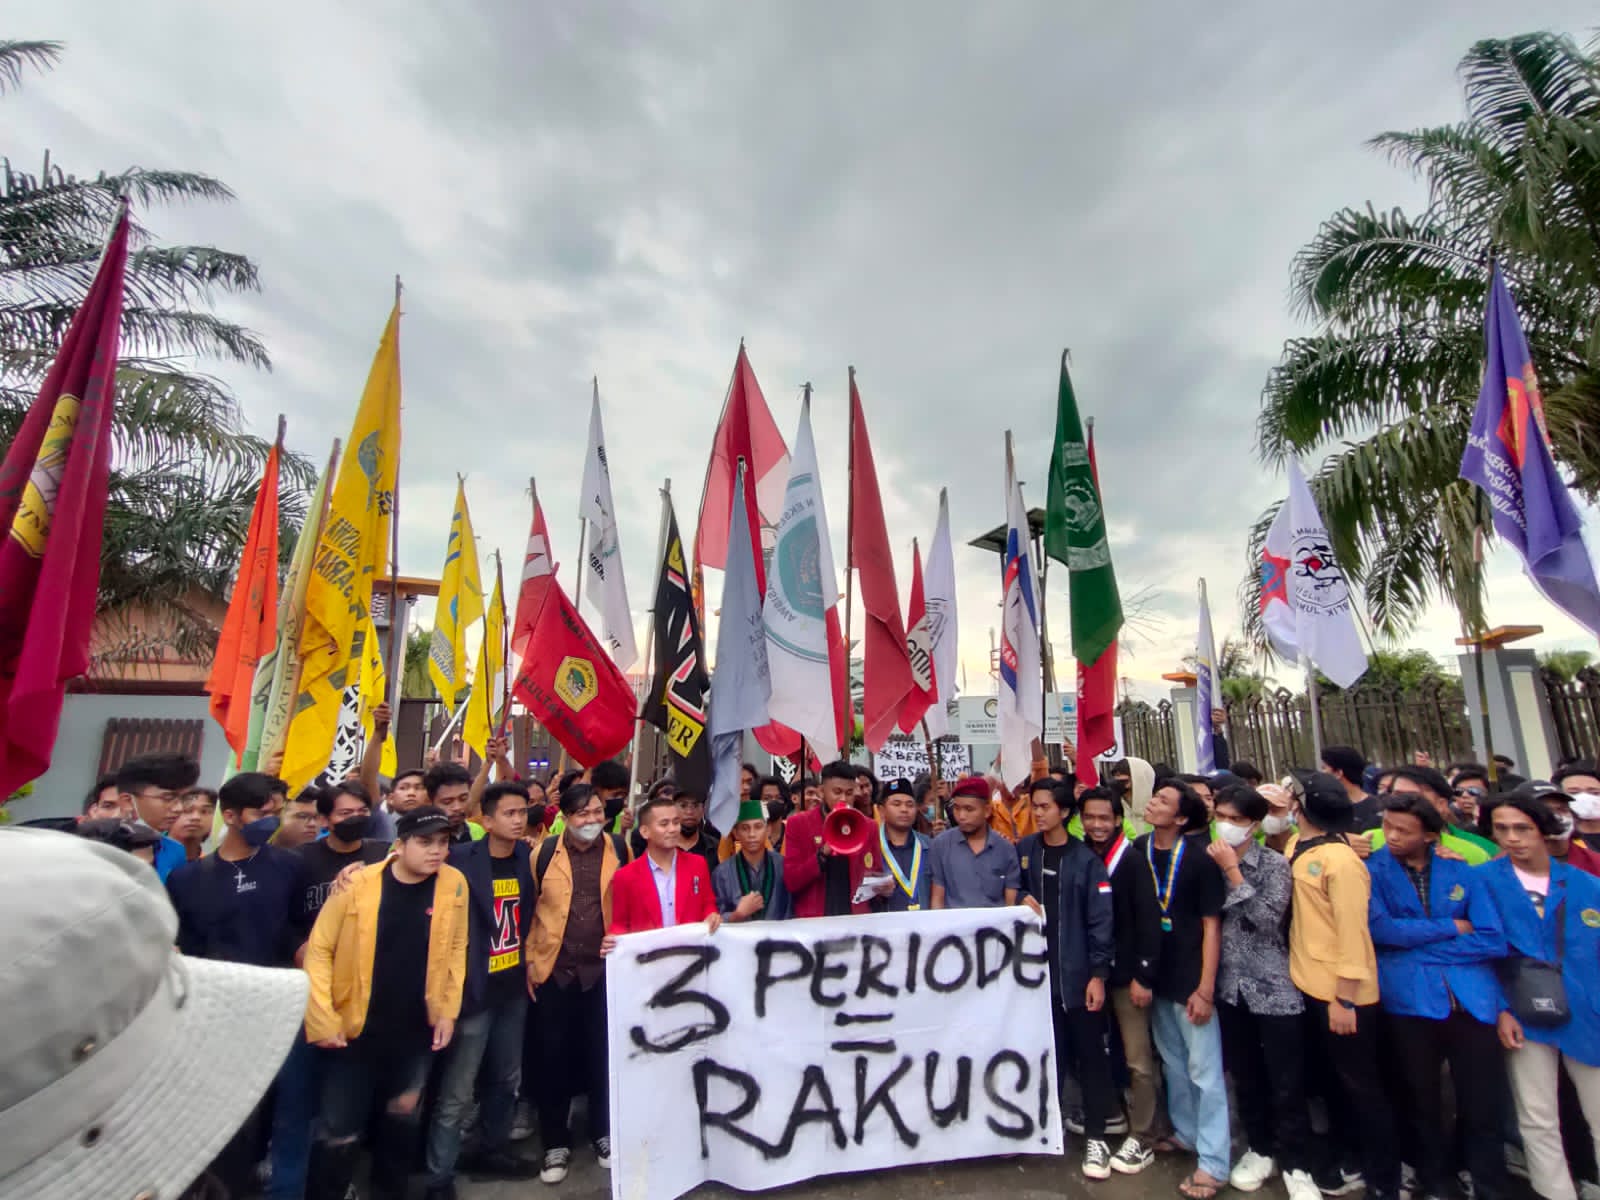 Gelar Aksi di Depan DPRD Kaltim, Aliansi MAHAKAM Sampaikan 3 Tuntutan